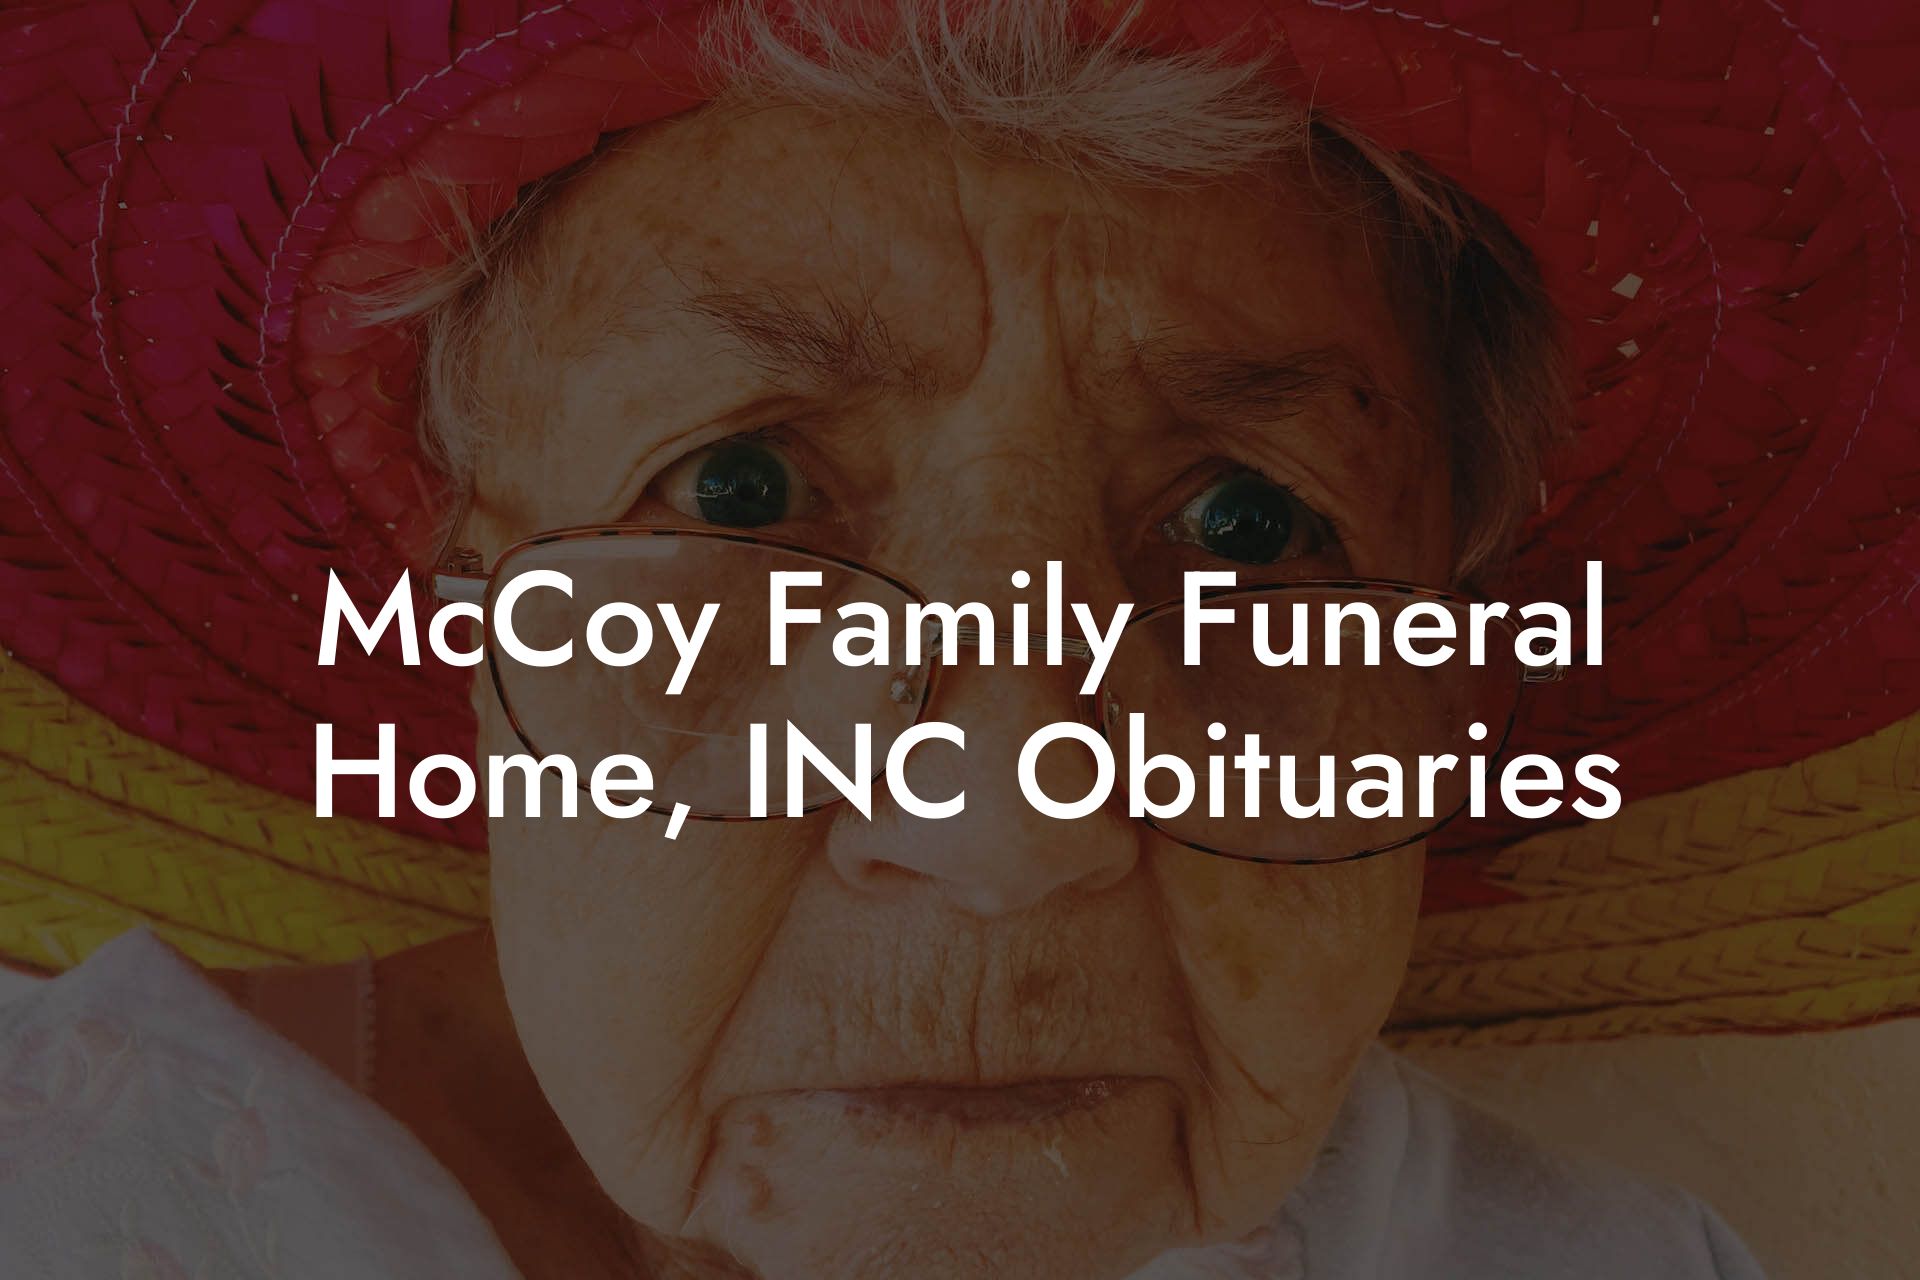 McCoy Family Funeral Home, INC Obituaries